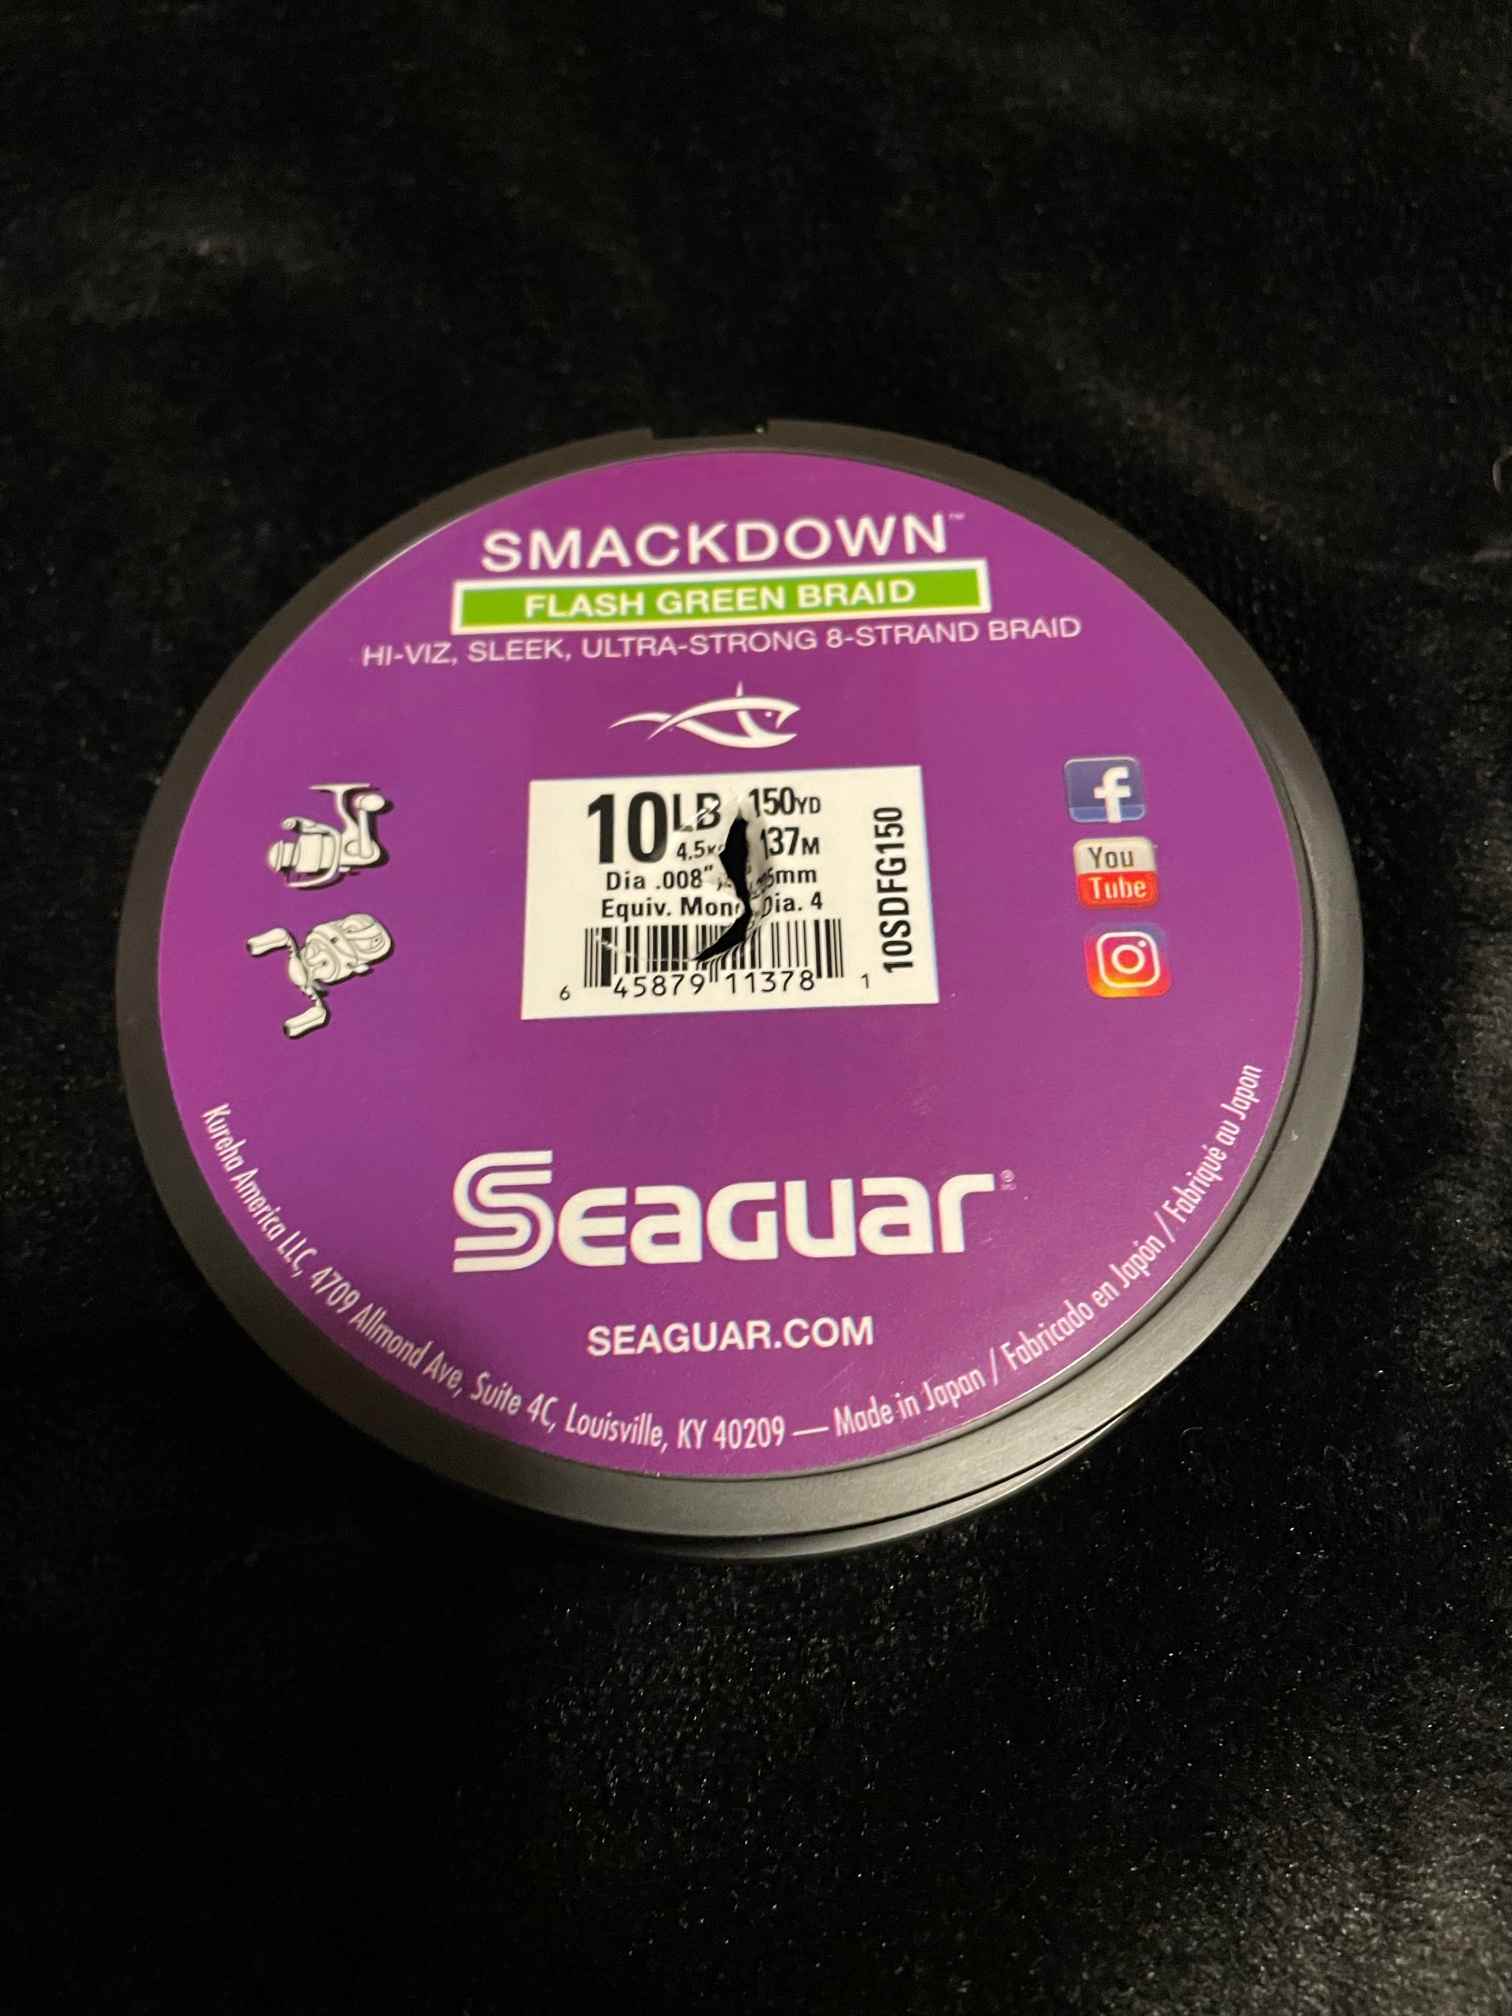 Seaguar Smackdown Issue, user error, bad spool, or freak accident